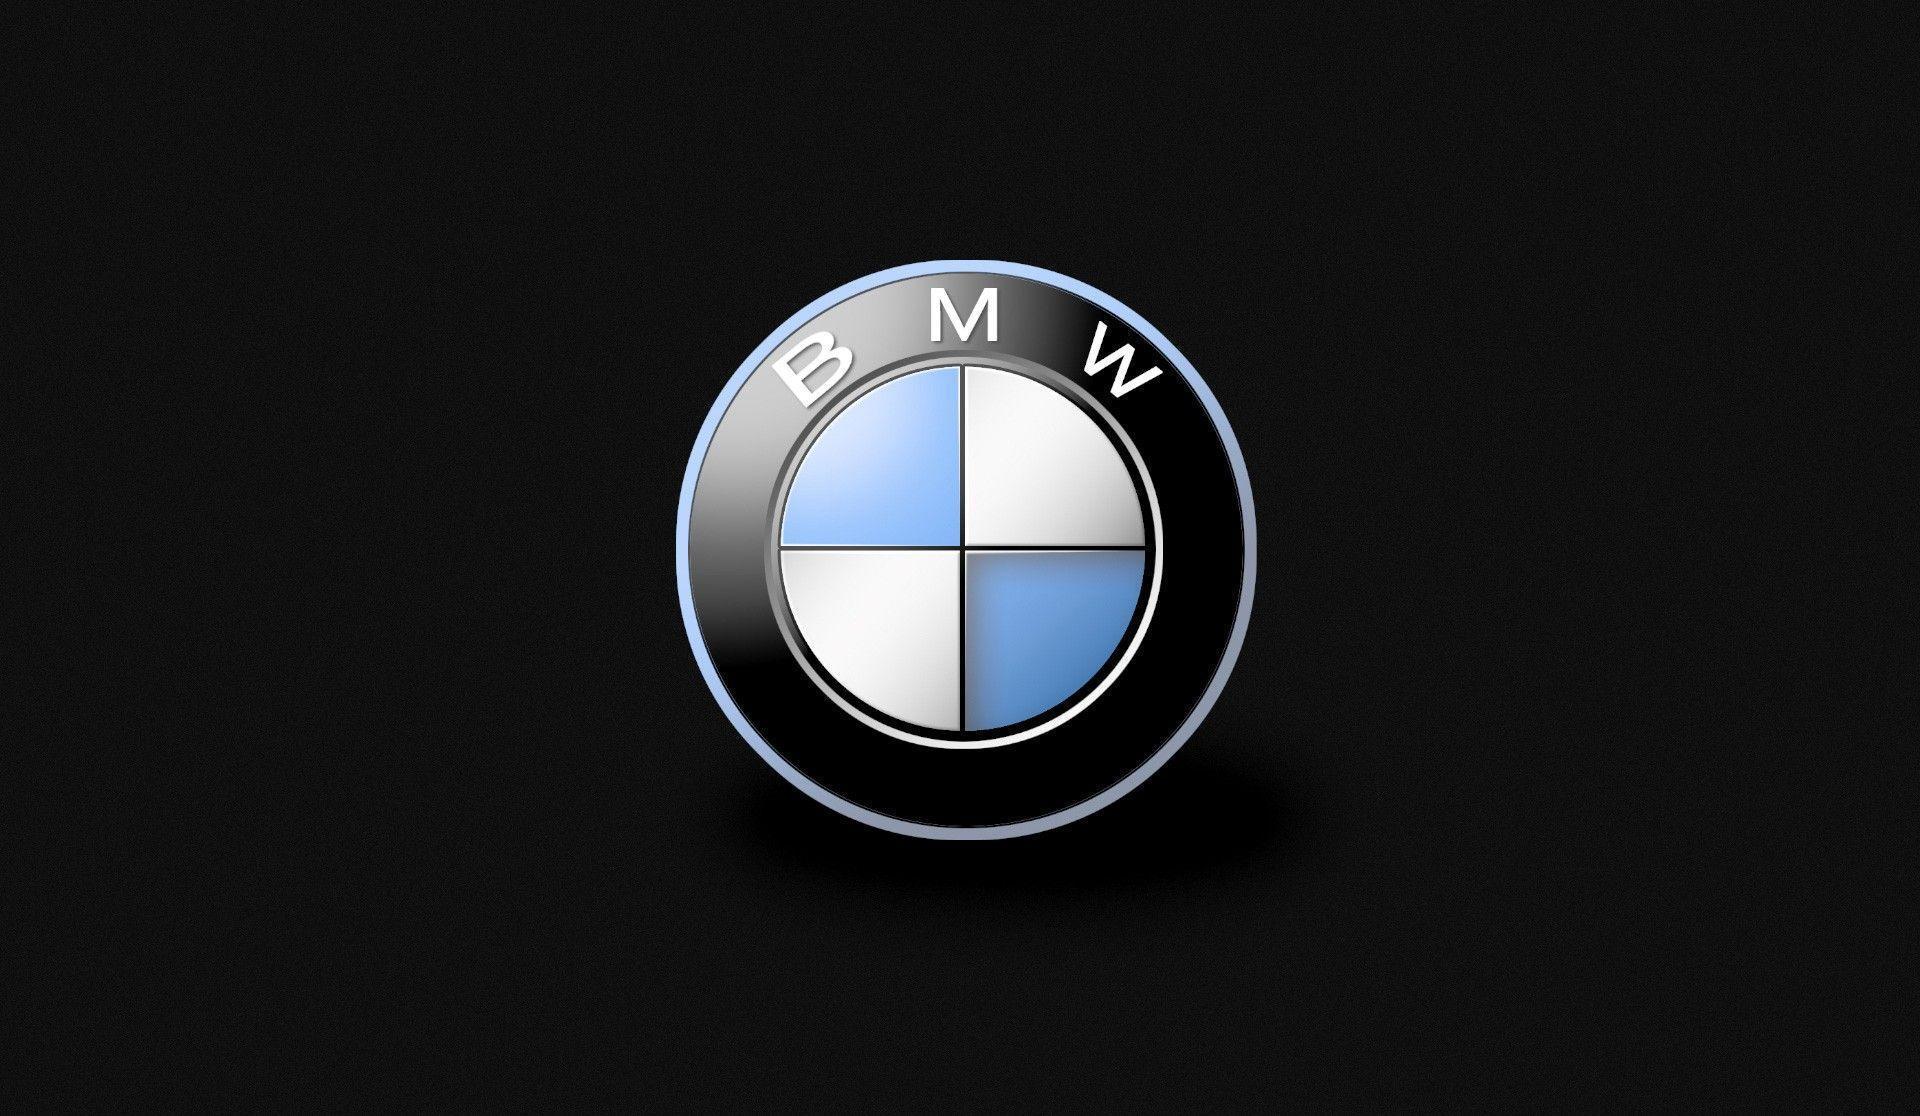 BMW Brand Cars Full HD Black Desktop Logo Wallpaper HD